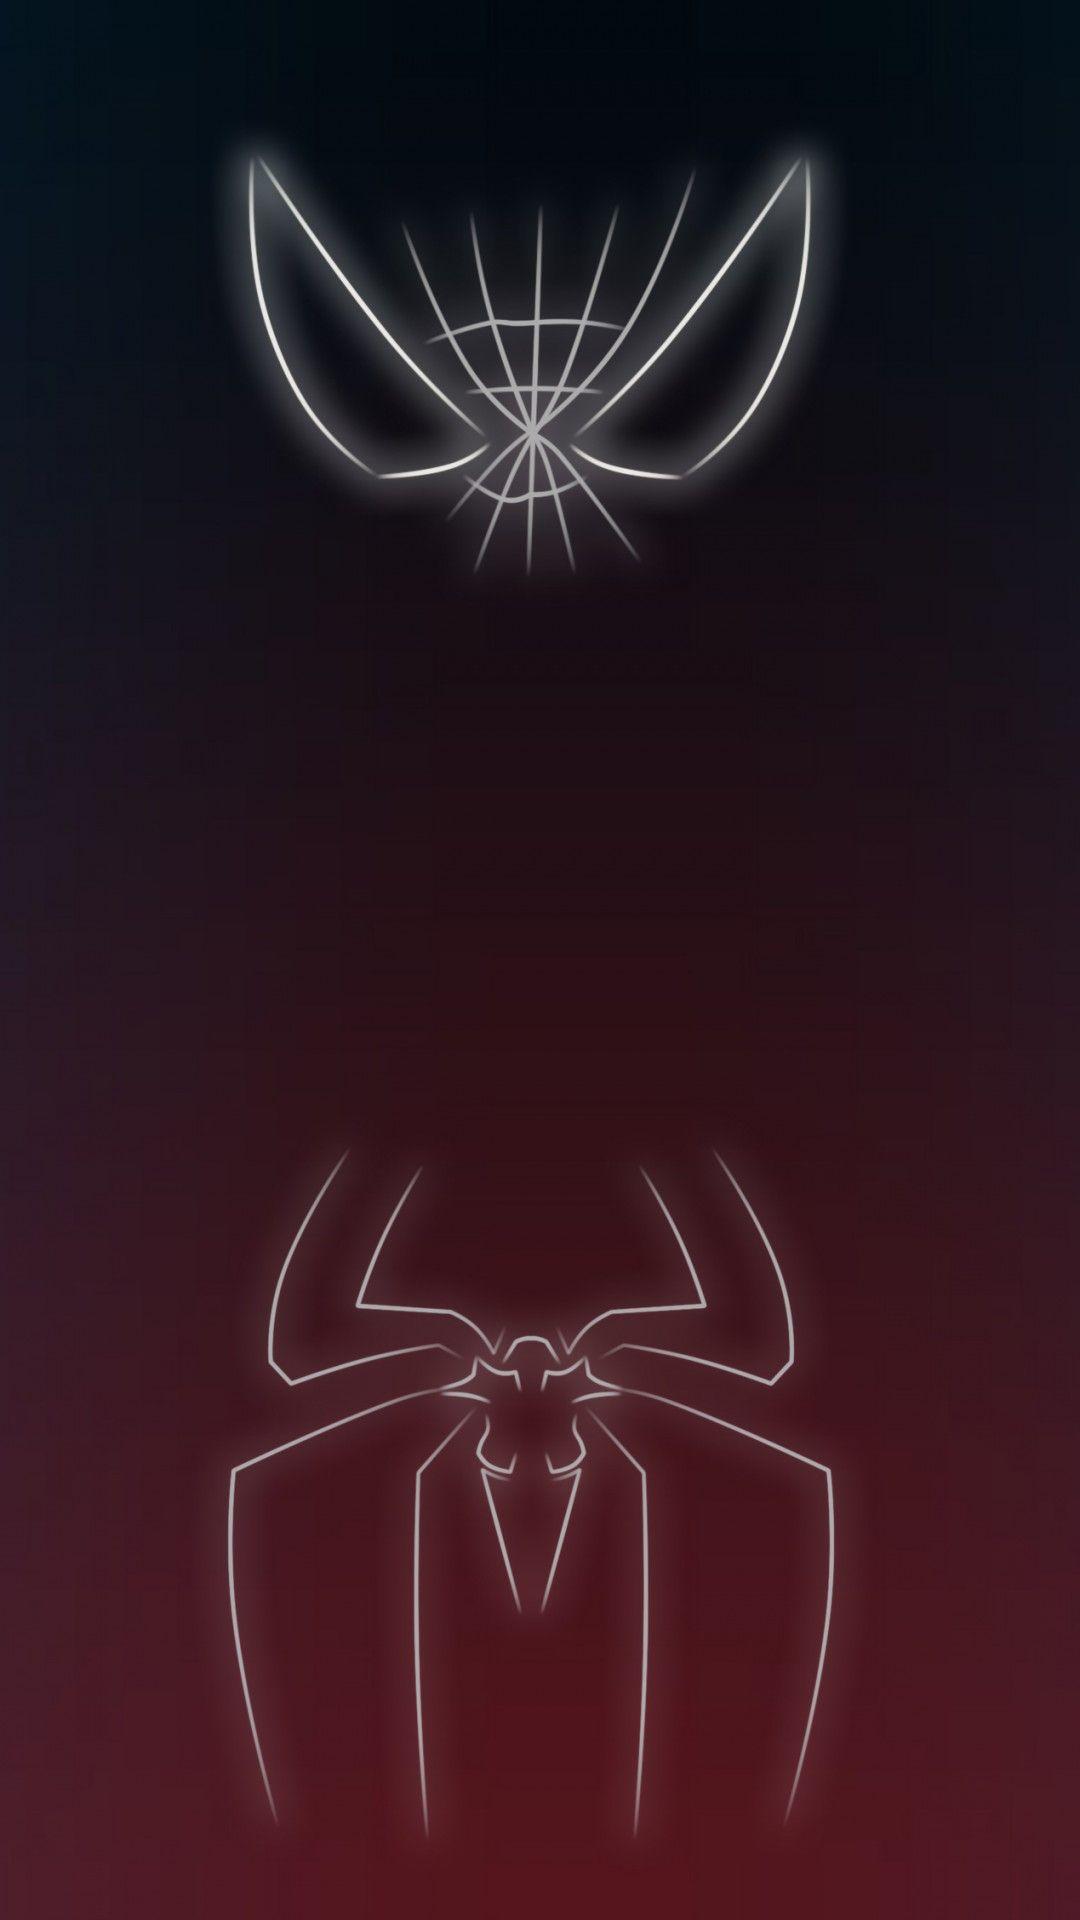 Neon Light Superhero Spiderman 1080 x 1920 Wallpaper